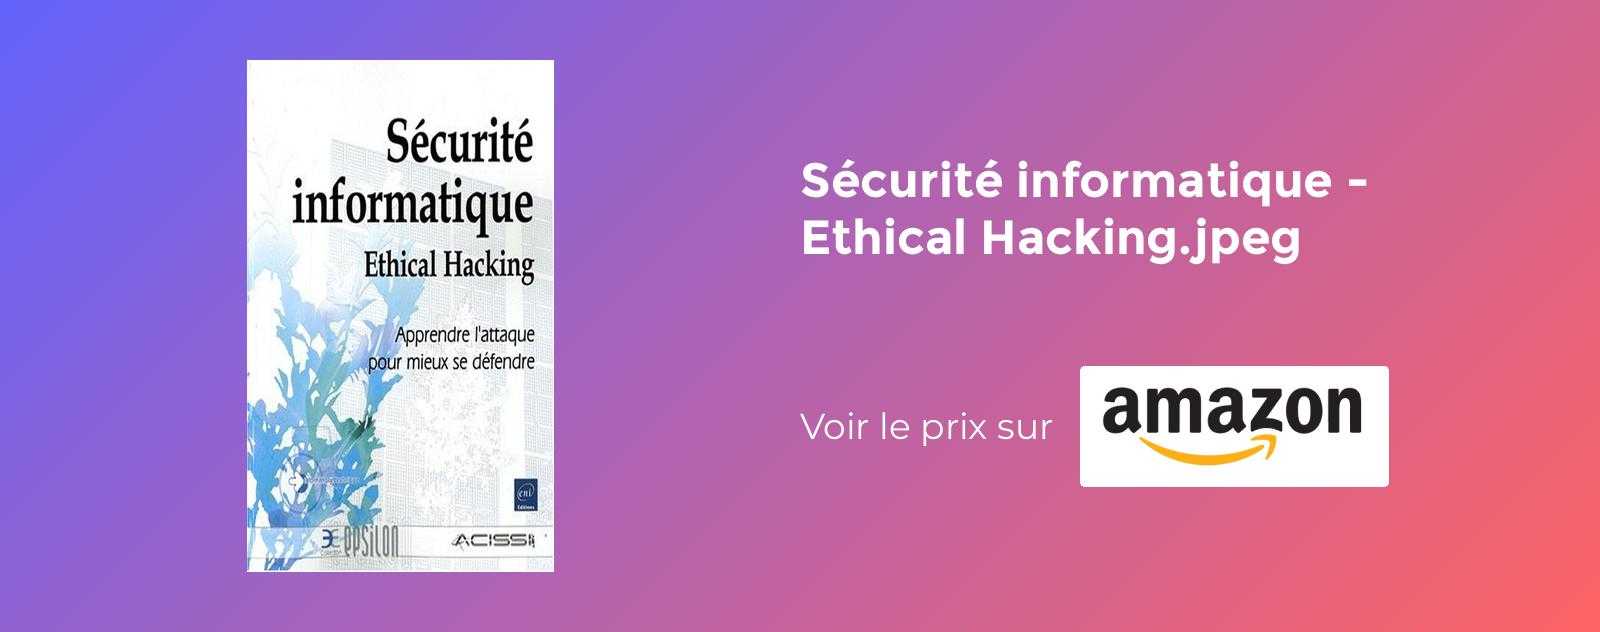 Sécurité informatique - Ethical Hacking